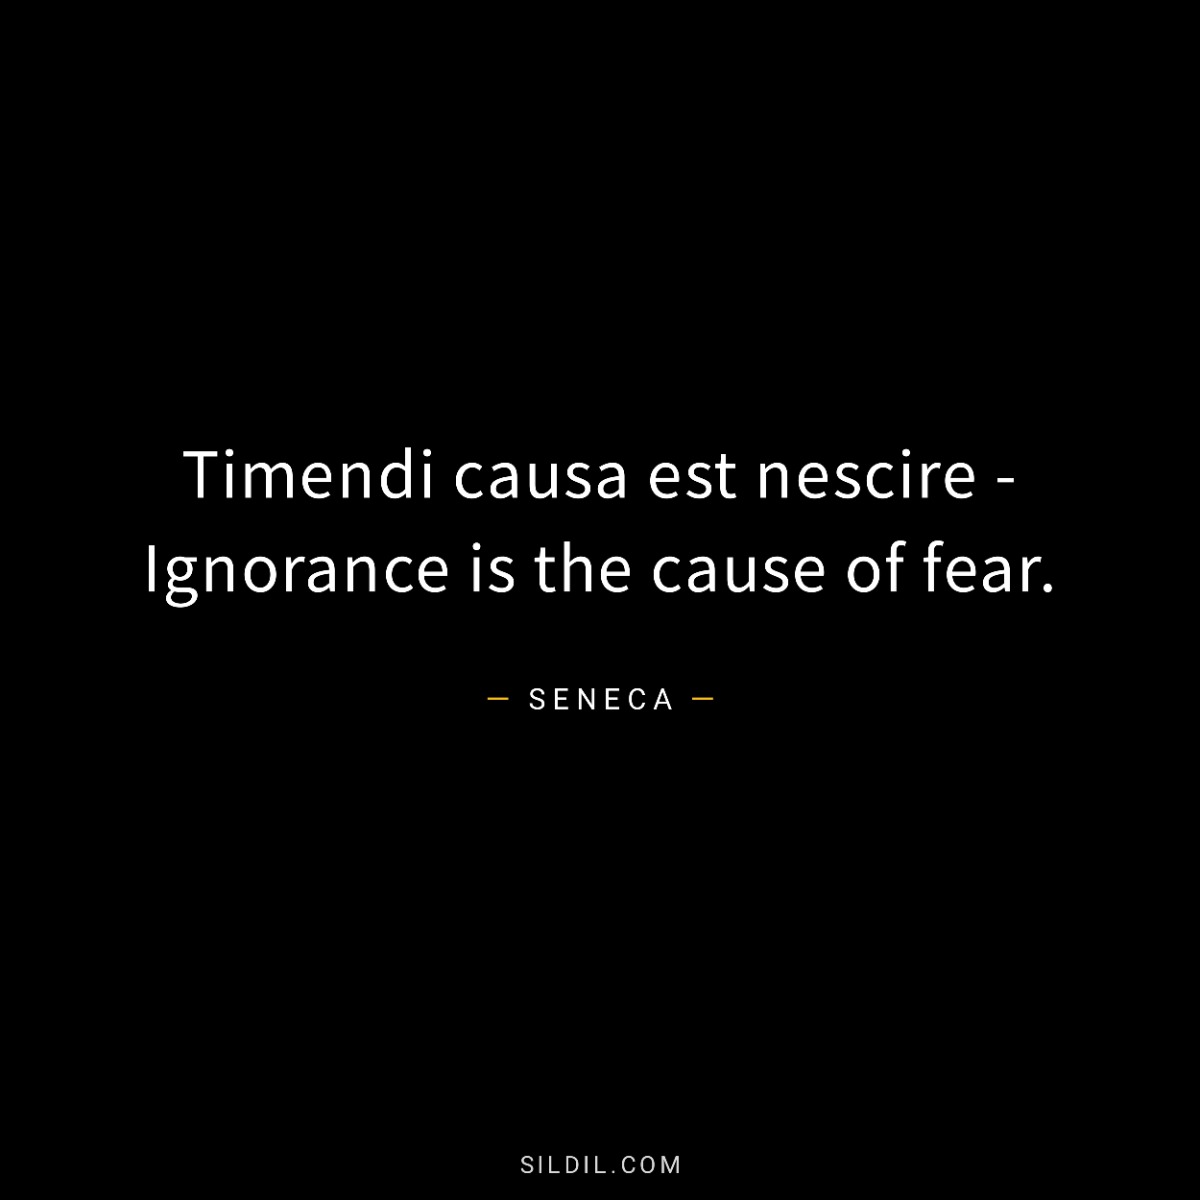 Timendi causa est nescire - Ignorance is the cause of fear.